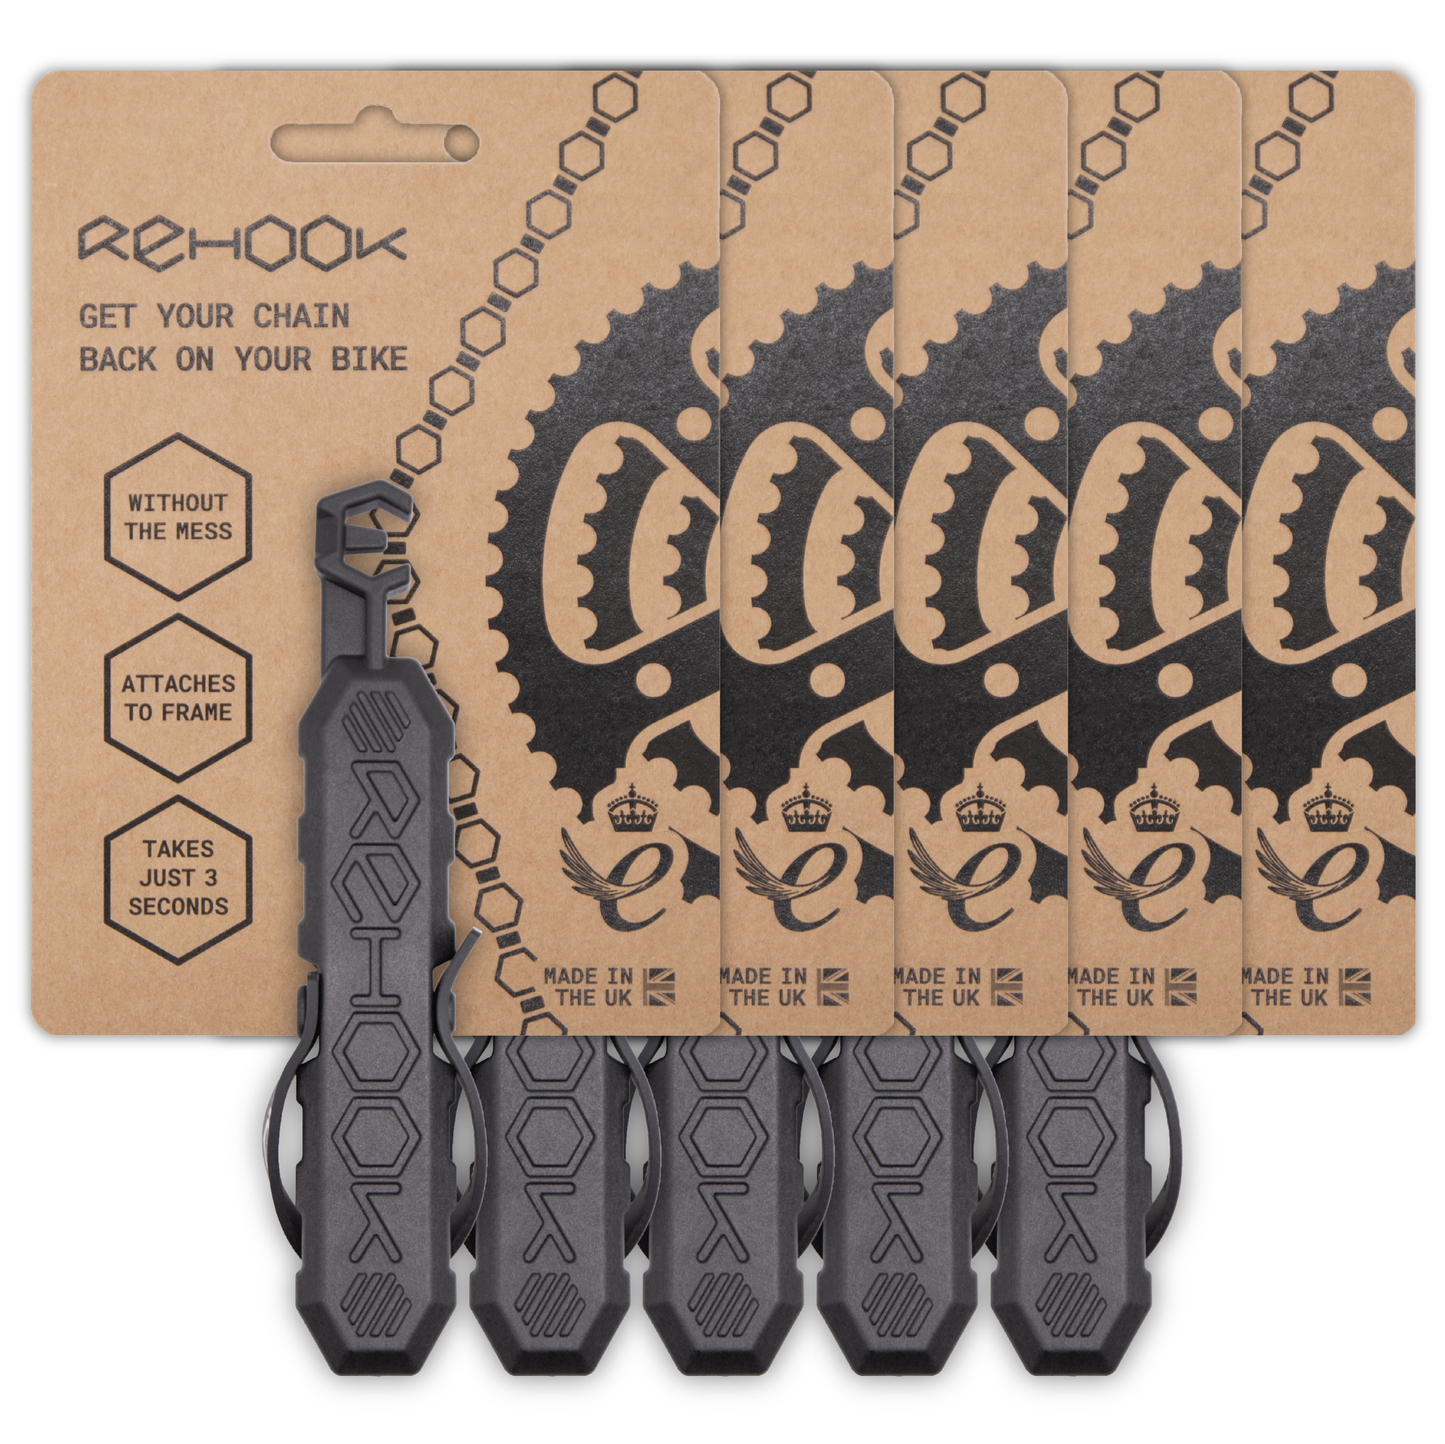 Rehook Original Chain Tool Bundle - Black